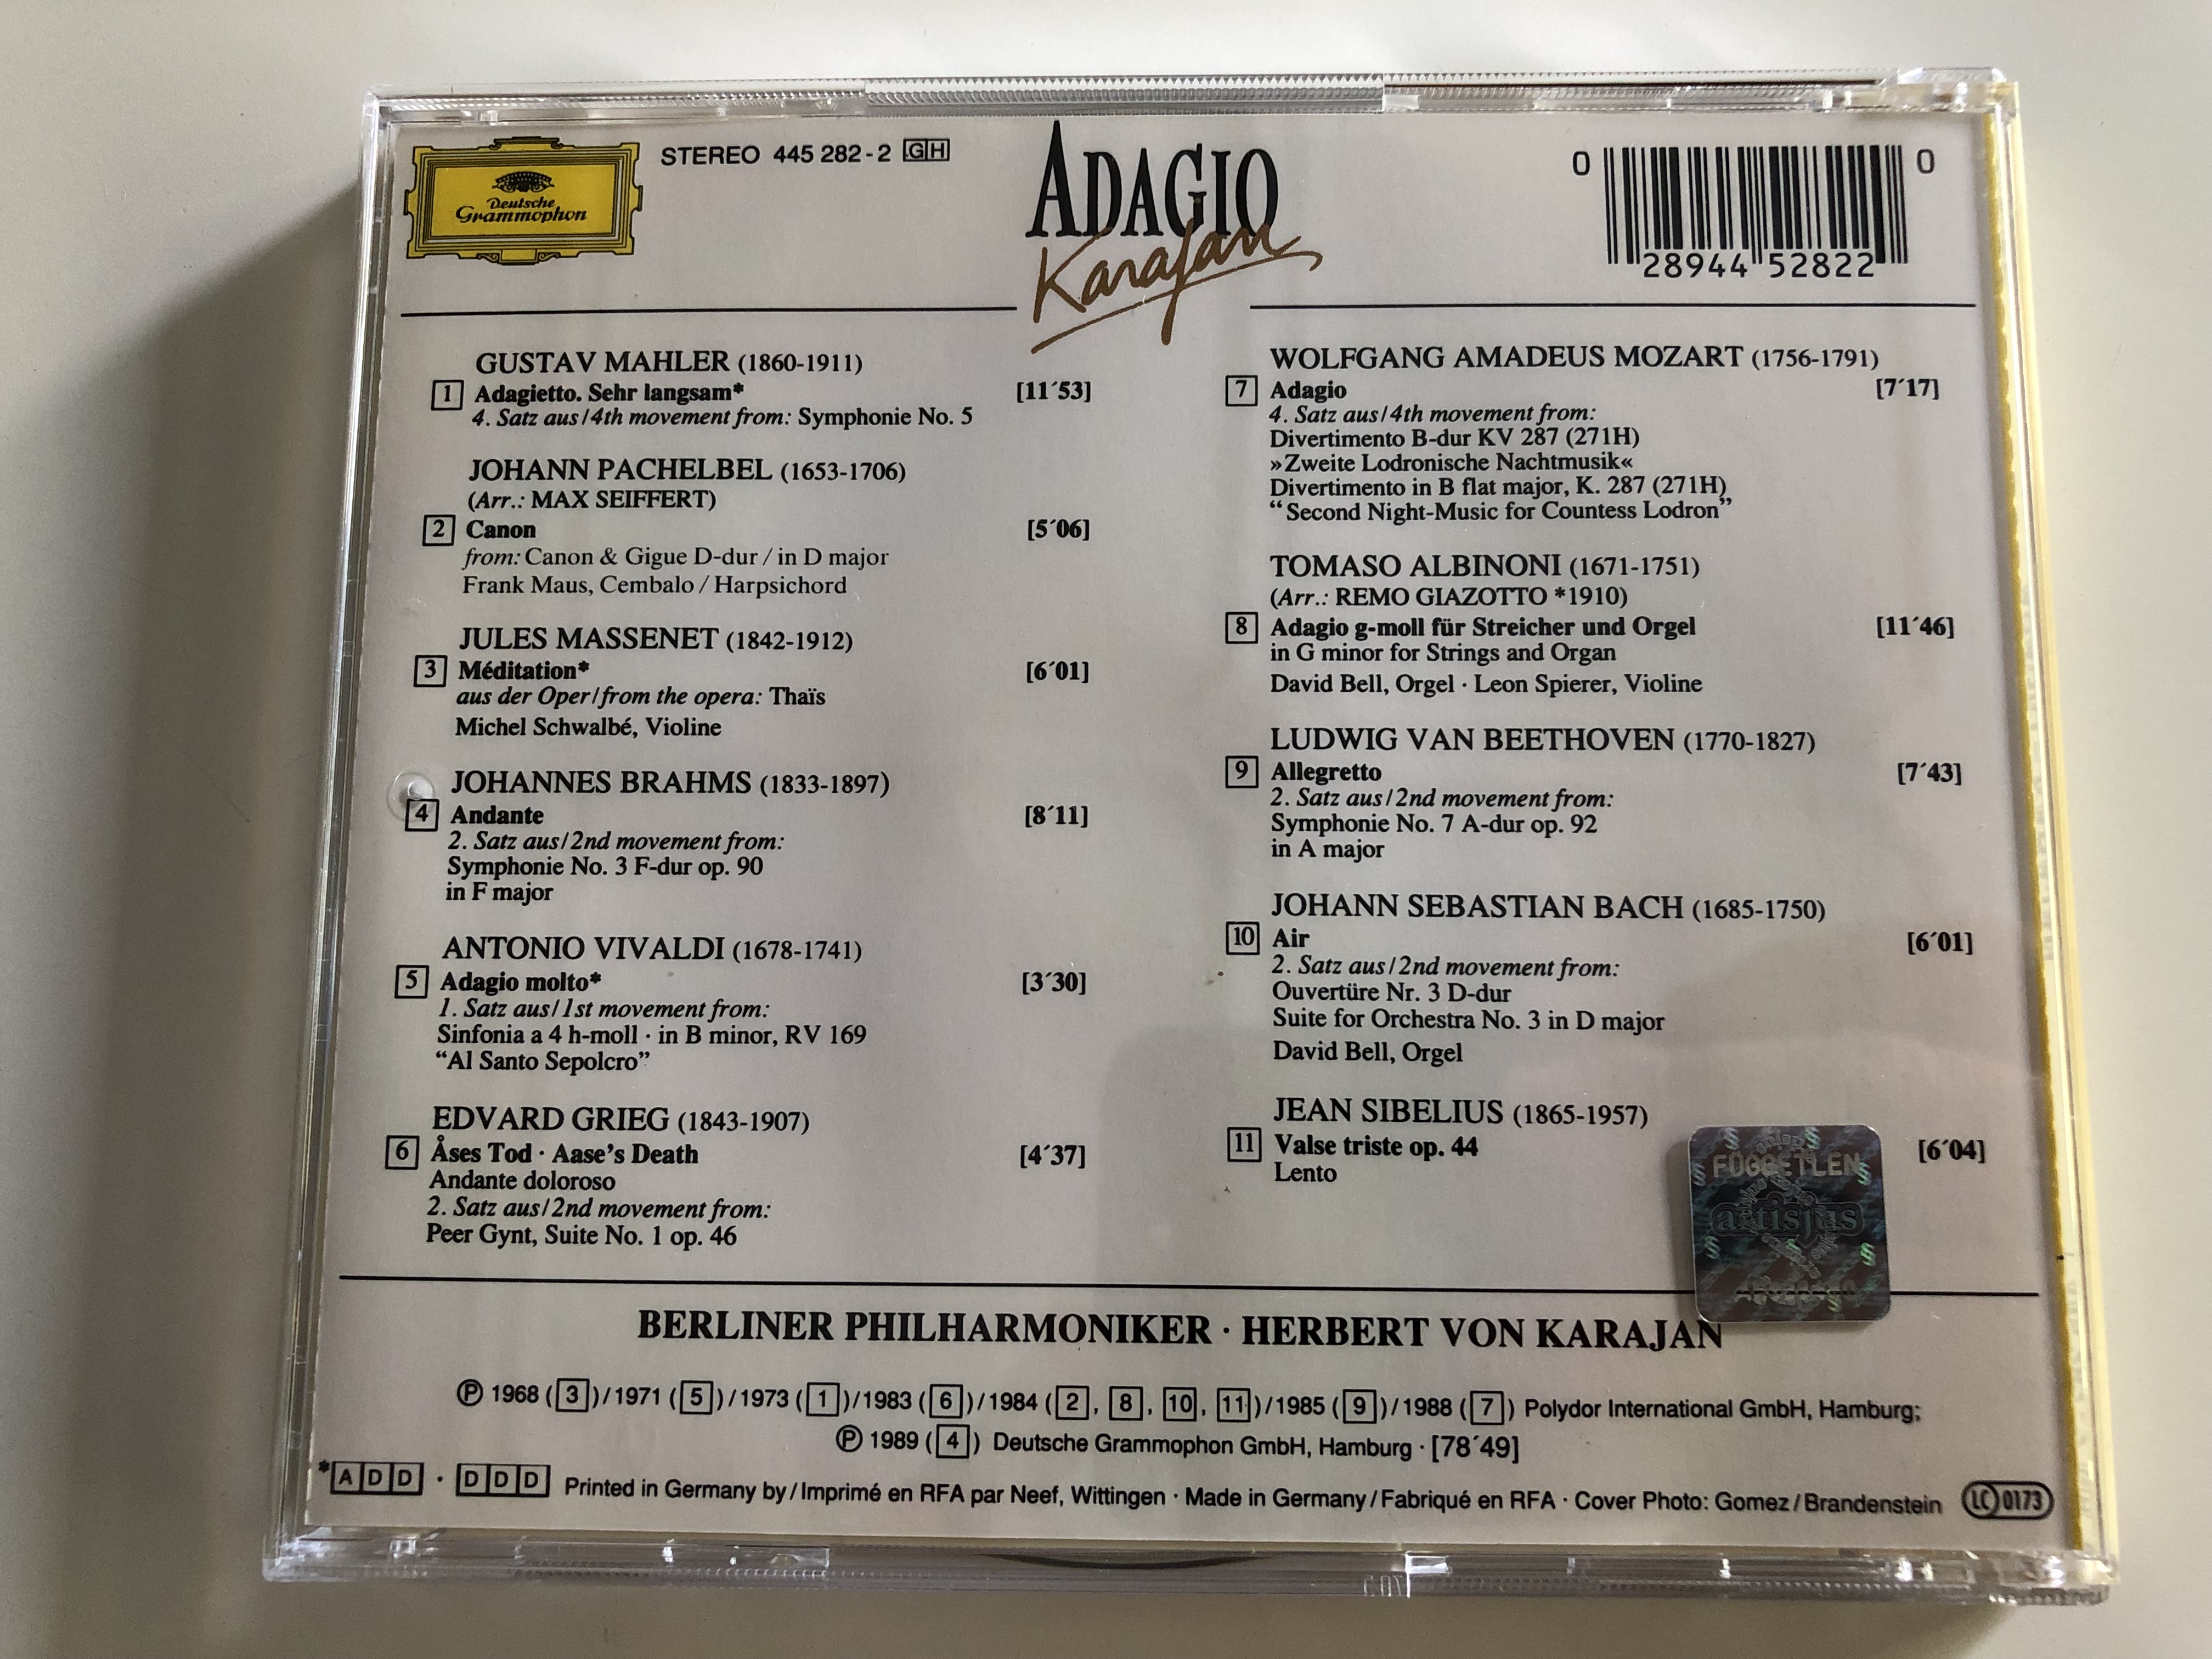 karajan-s-adagio-berliner-philharmoniker-herbert-von-karajan-mahler-pachelbel-massenet-brahms-vivaldi-grieg-mozart-sibelius-audio-cd-1989-445-232-2-7-.jpg